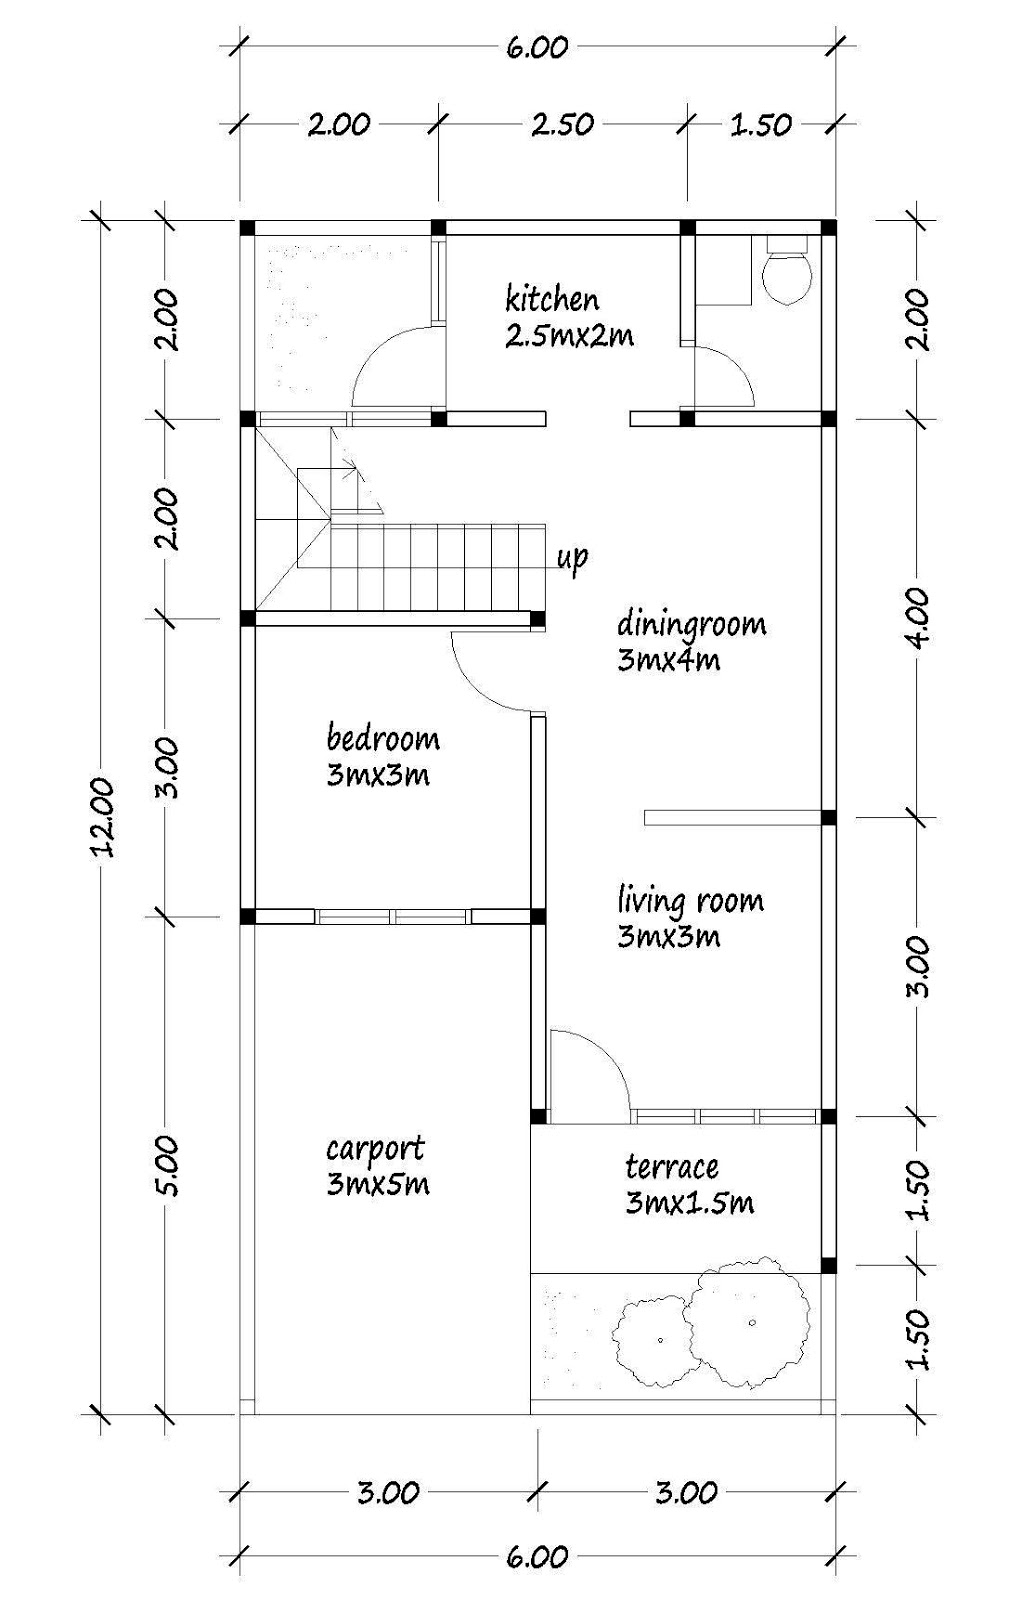 Simple Floor Plan With Dimensions In Meters / If your floor plan has a